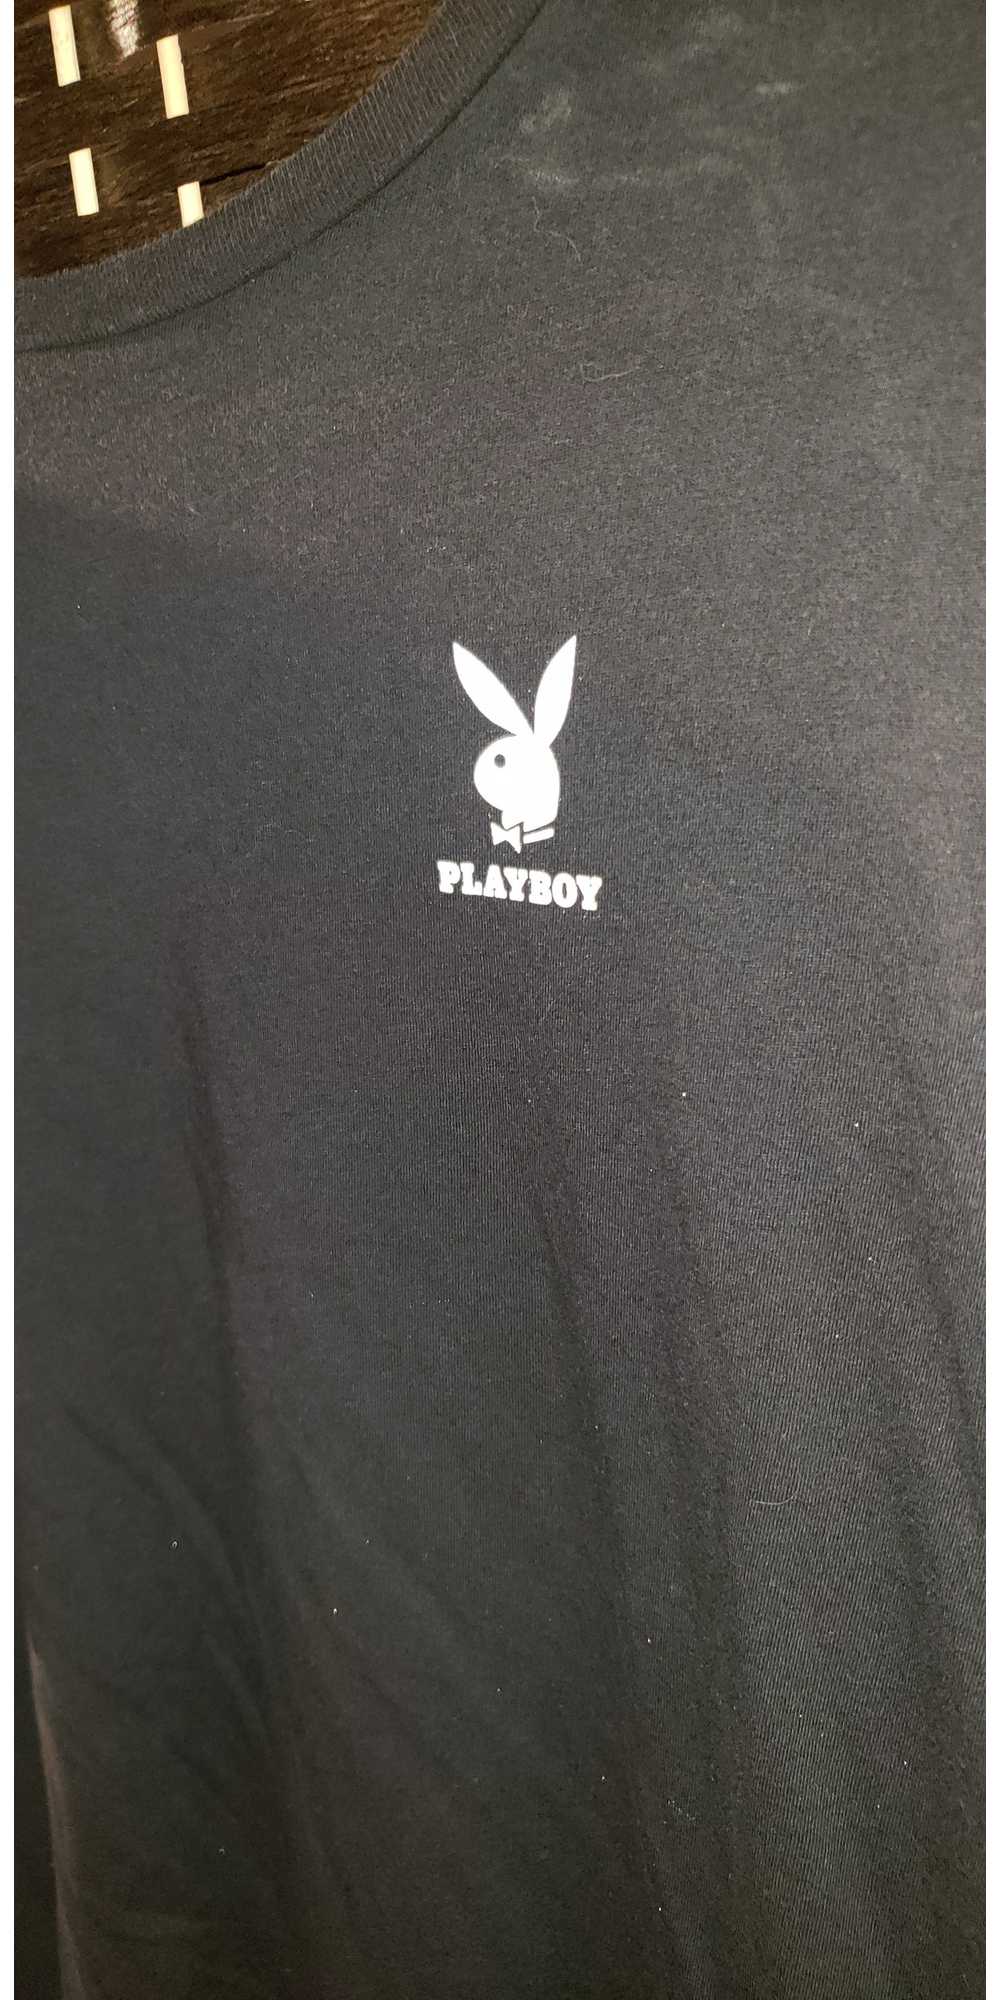 Pacsun × Playboy Playboy x Pacsun - image 7